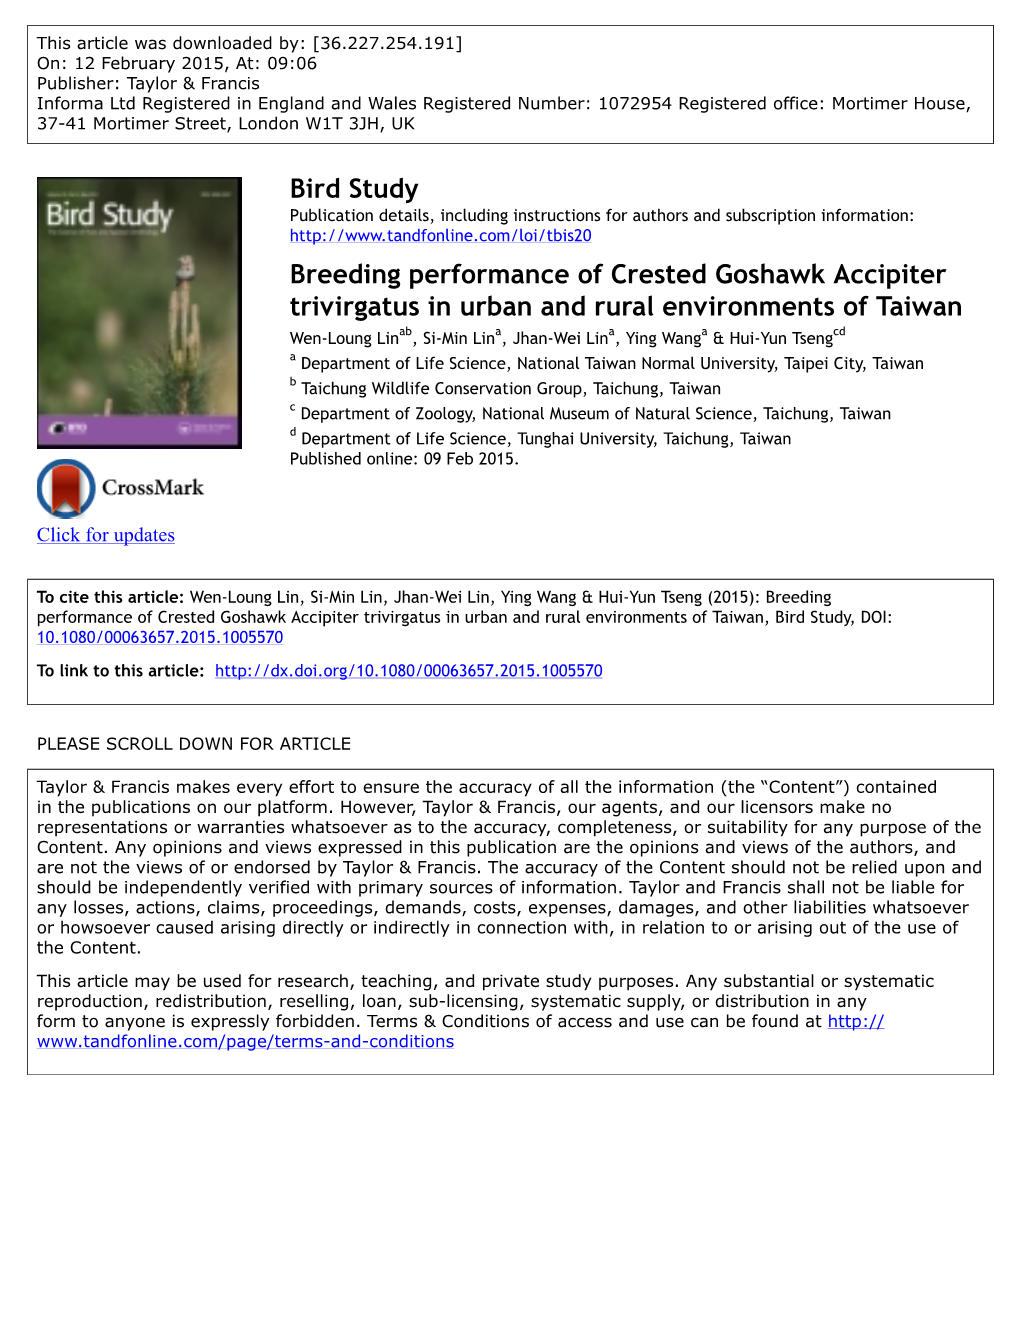 Bird Study Breeding Performance of Crested Goshawk Accipiter